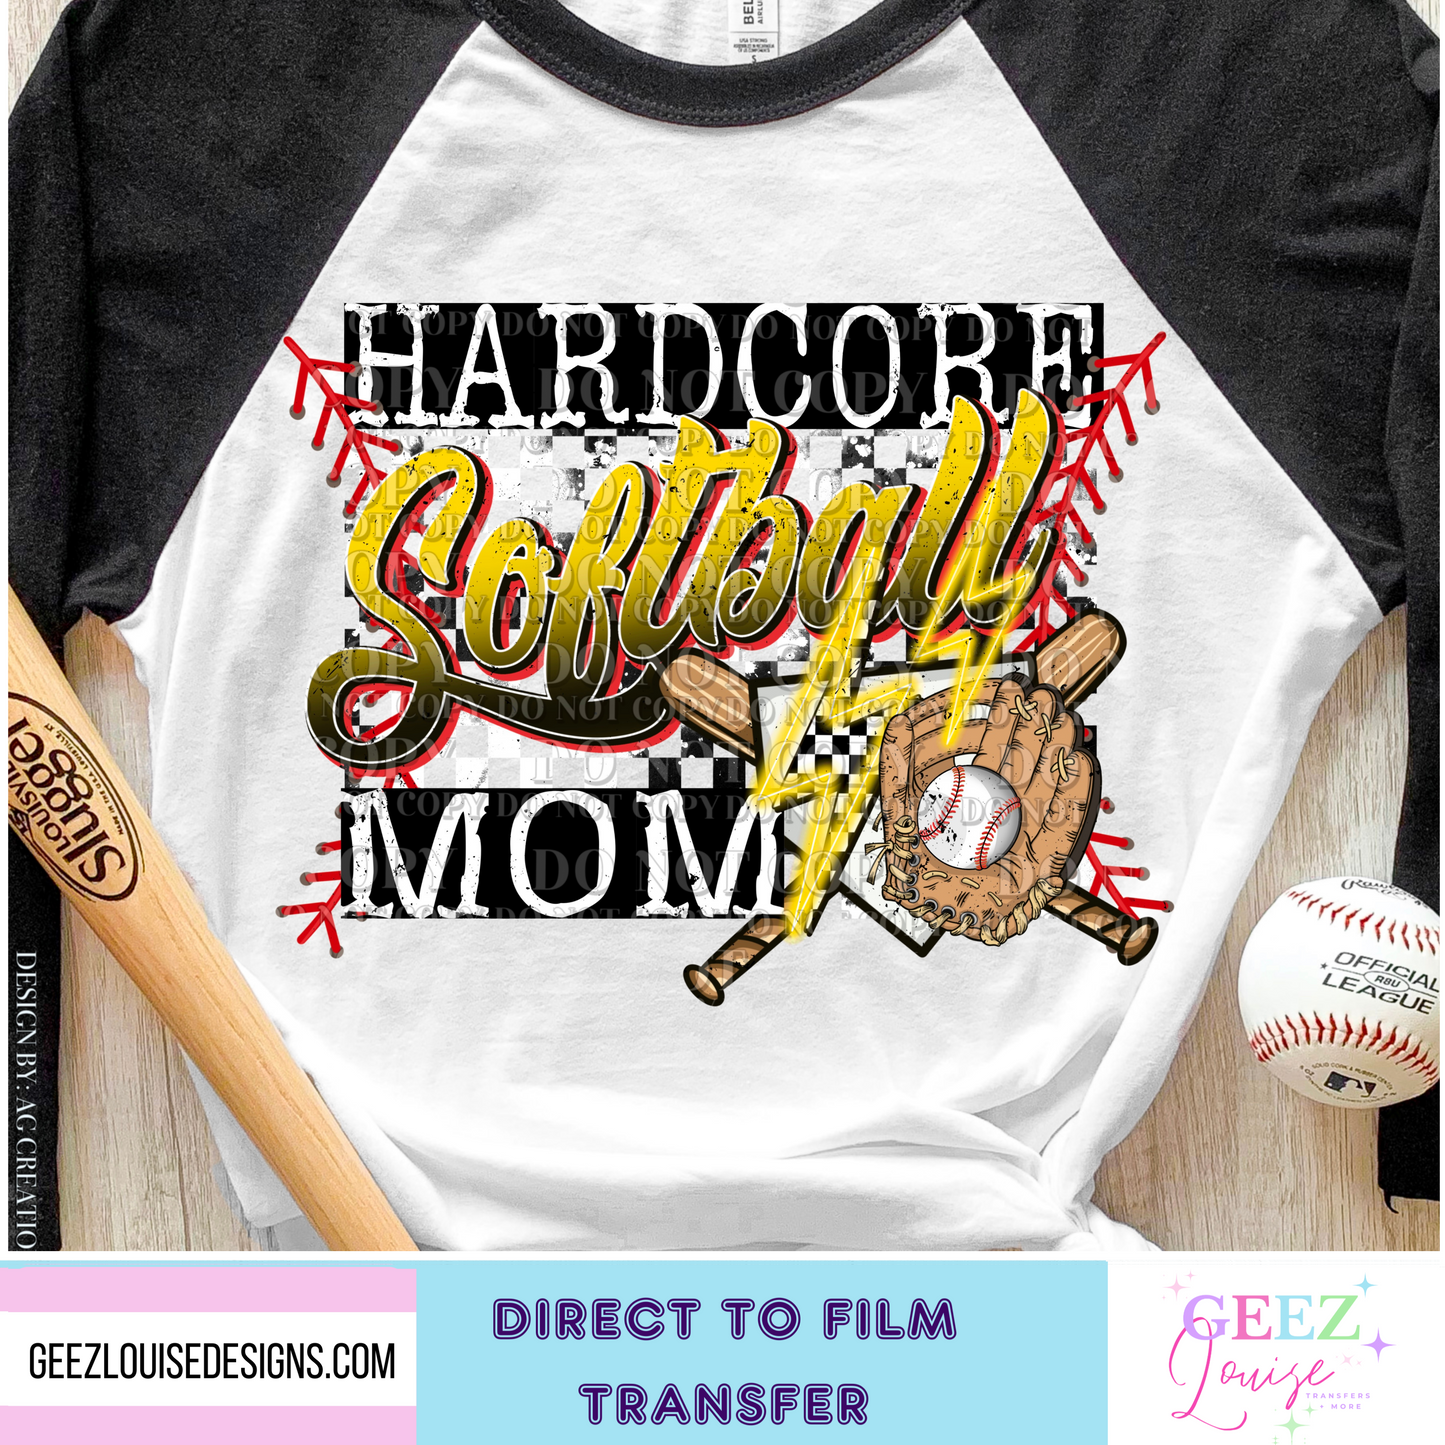 Hardcore Softball mom - Direct to Film Transfer - made to order